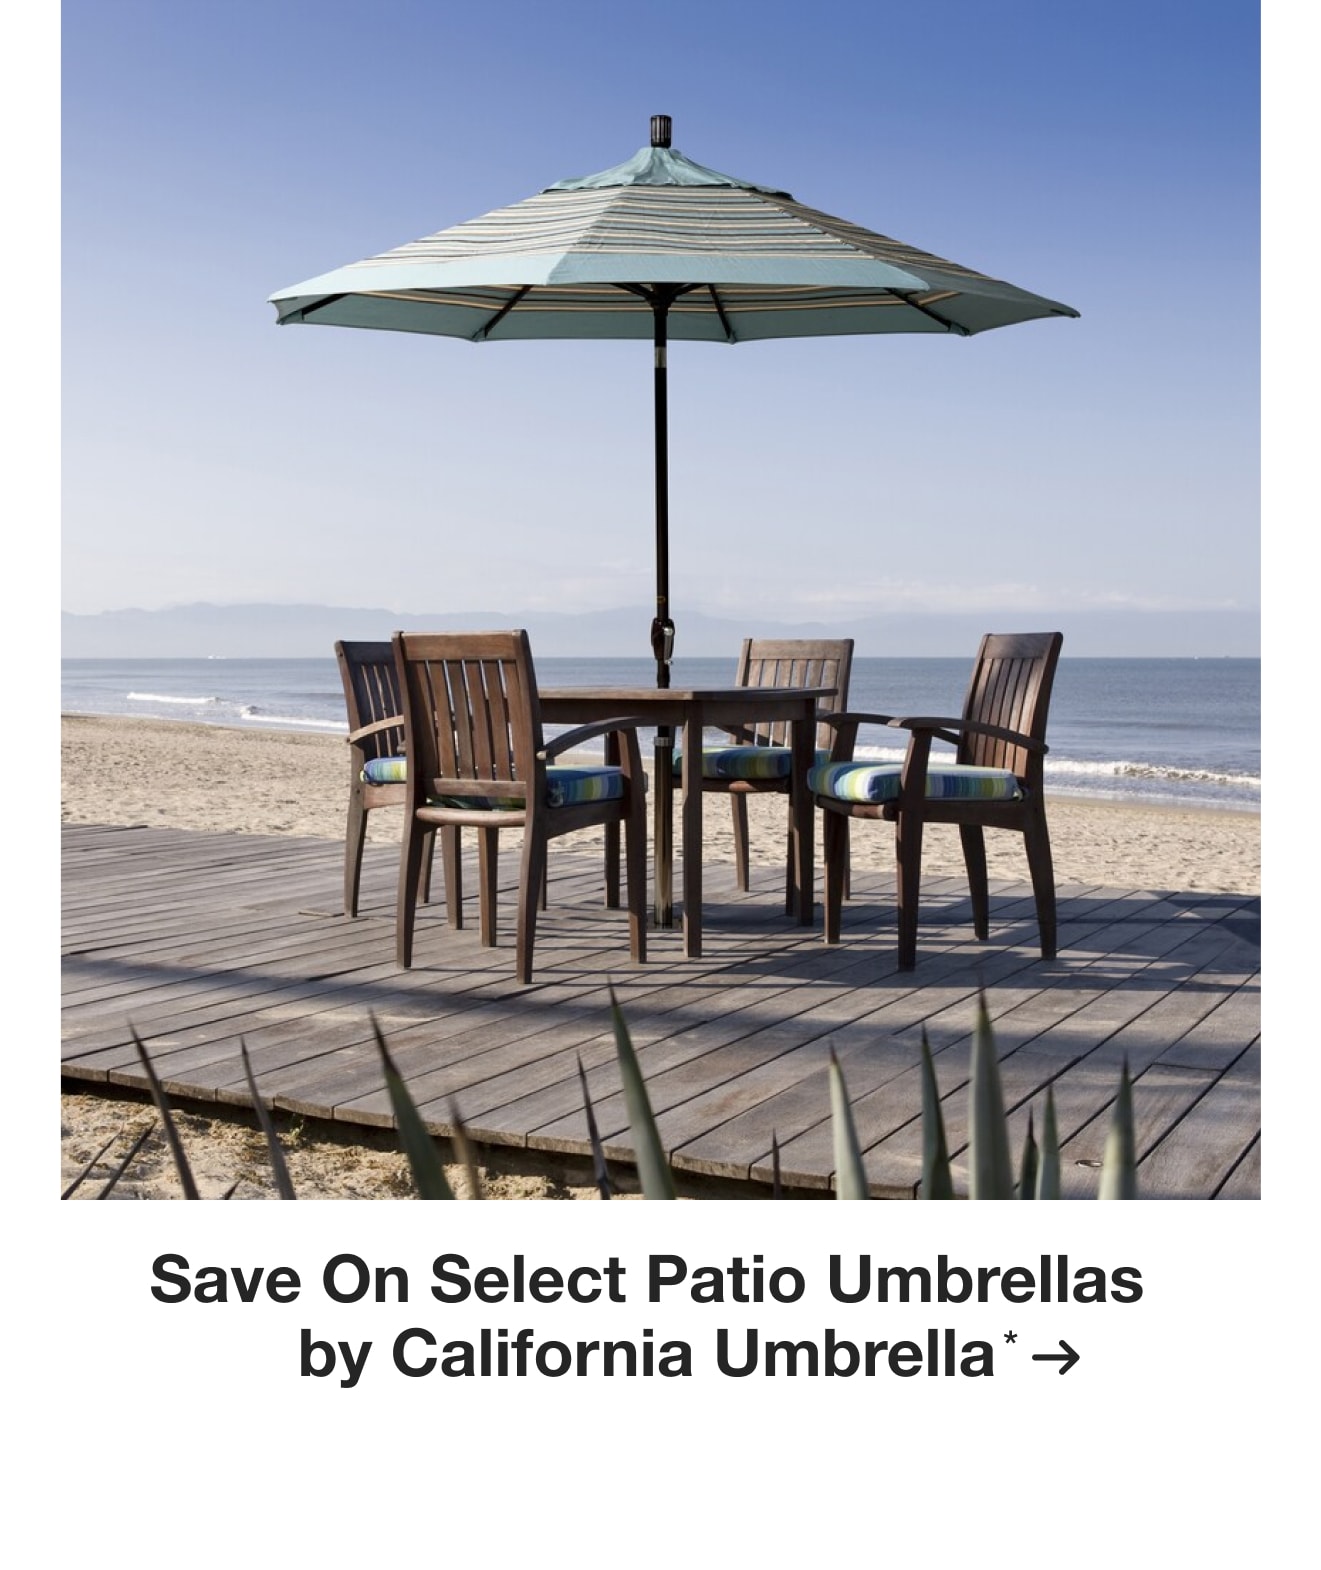 Save On Select Patio Umbrellas by California Umbrella